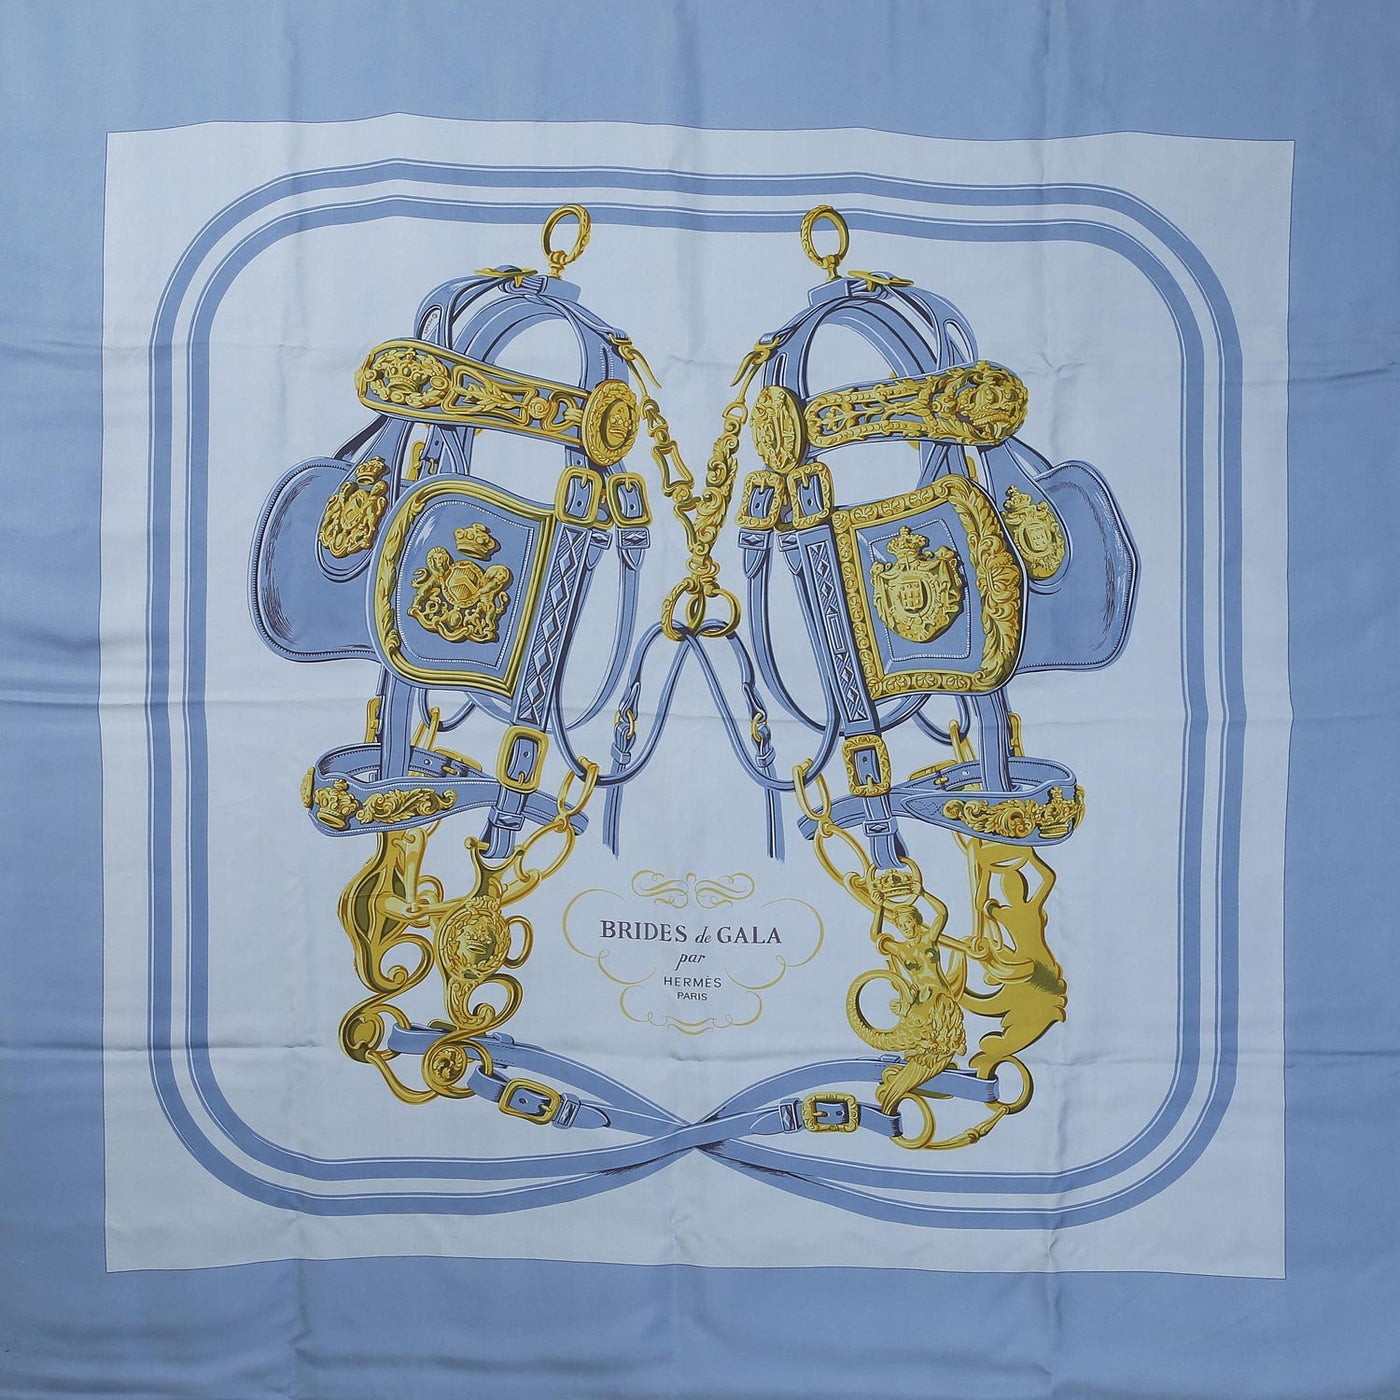 Hermes "Bride De Gala” large silk shawl 140x140cm RRP: £1000